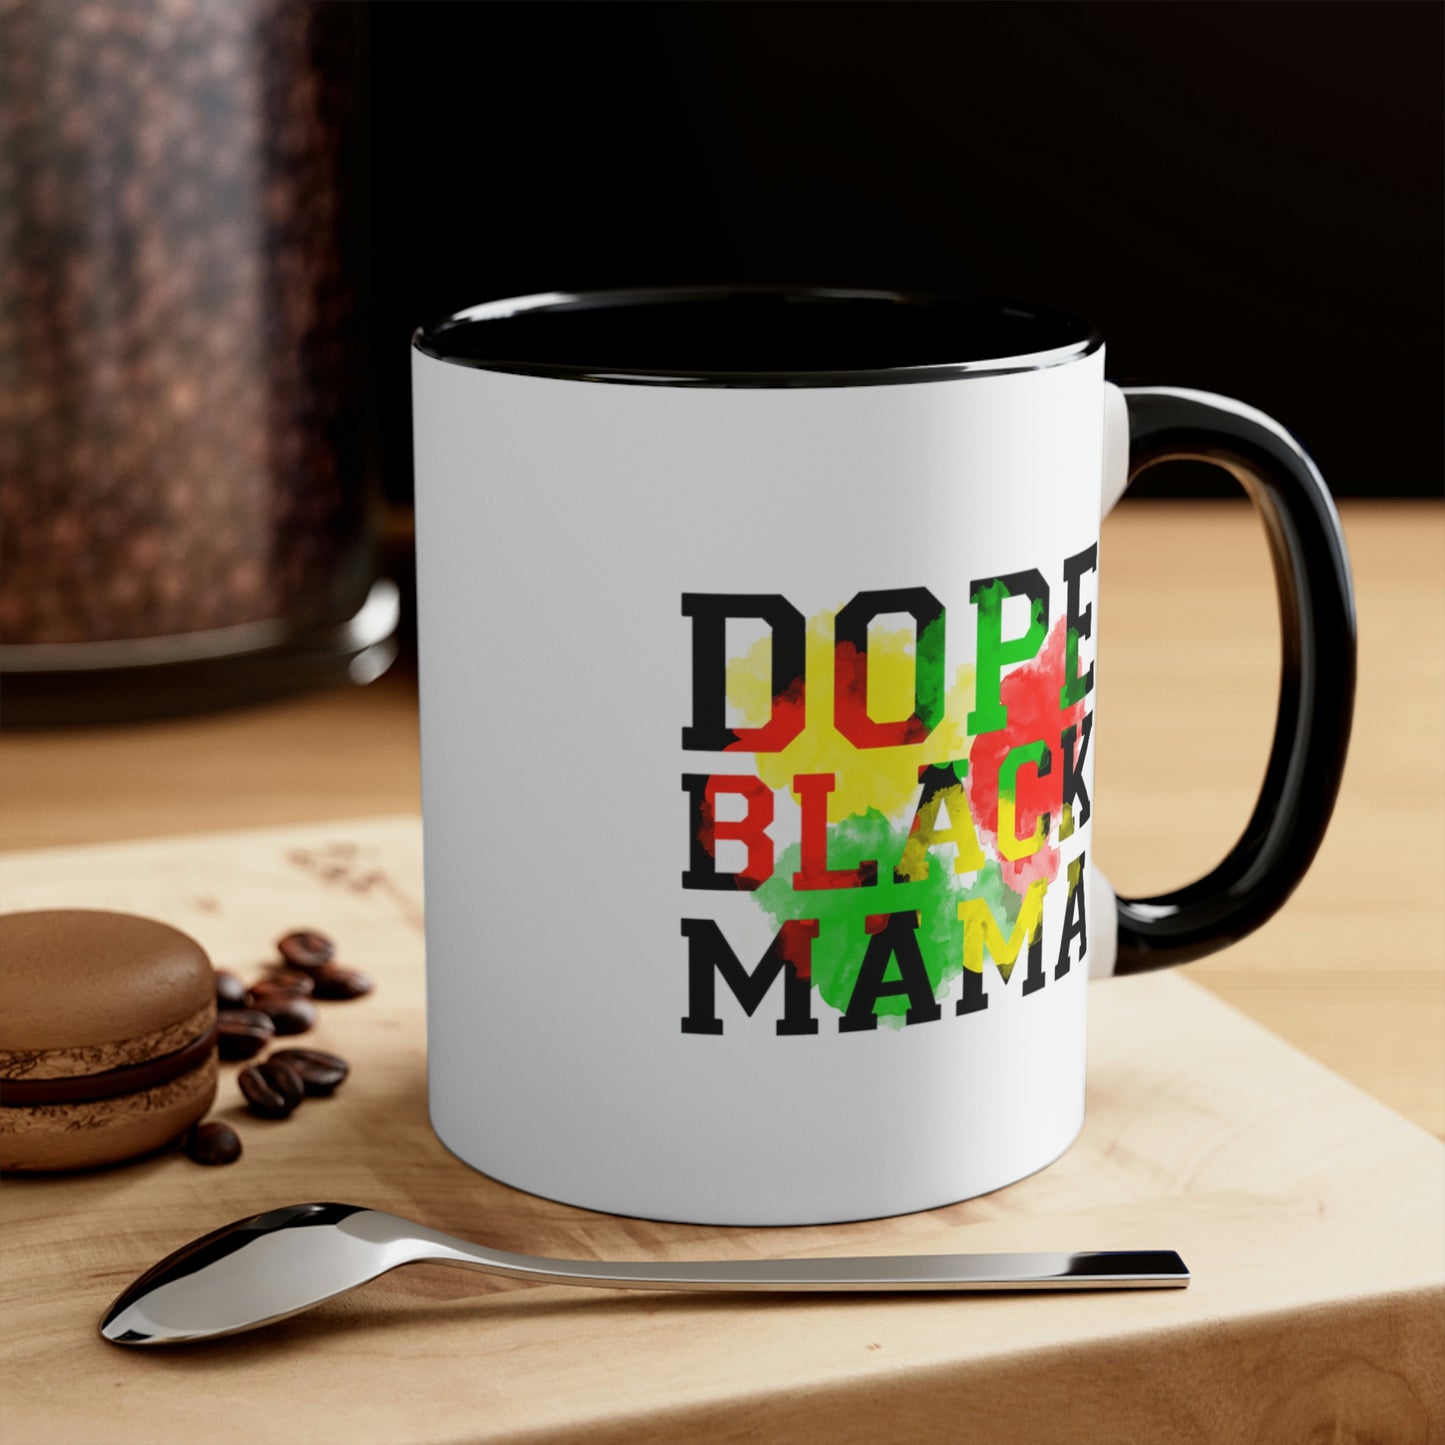 Dope Black Mama Accent Coffee Mug